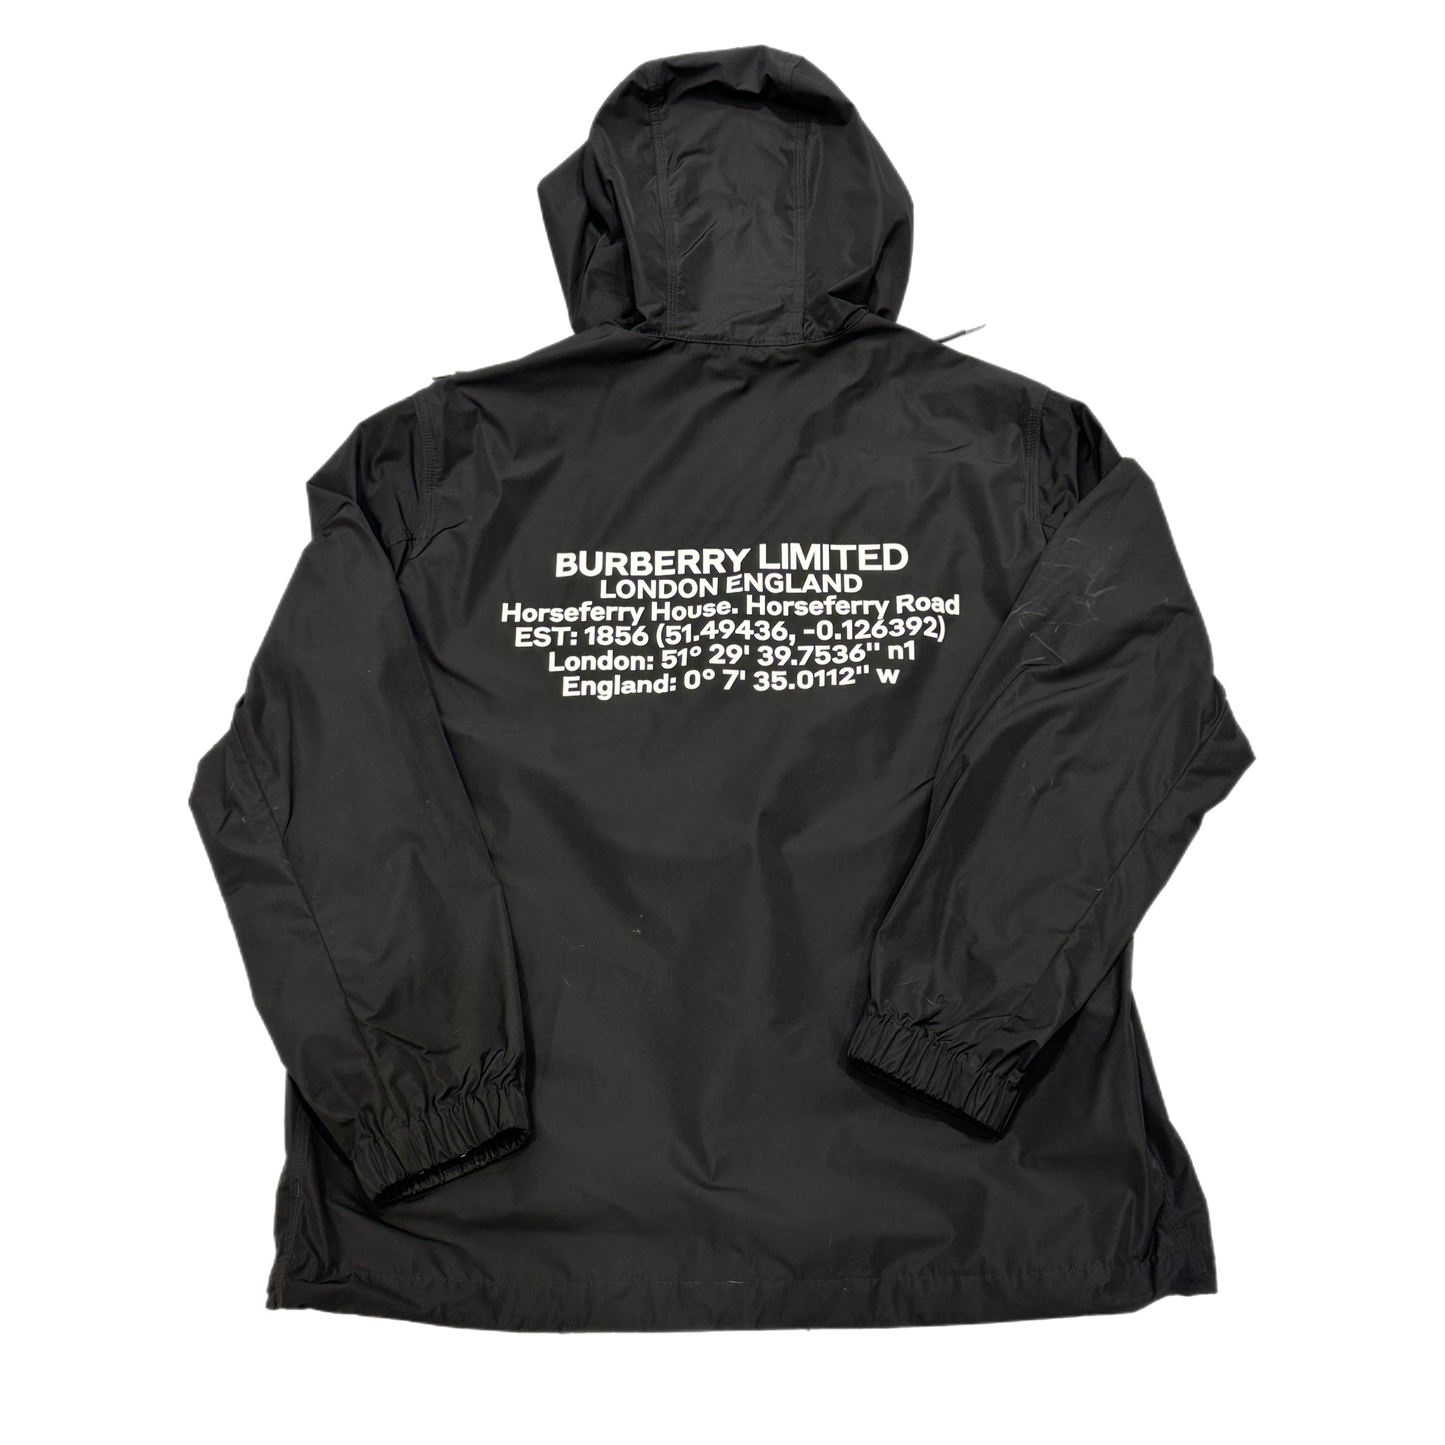 Burberry - " Black Zip Up Jacket" -Size Large